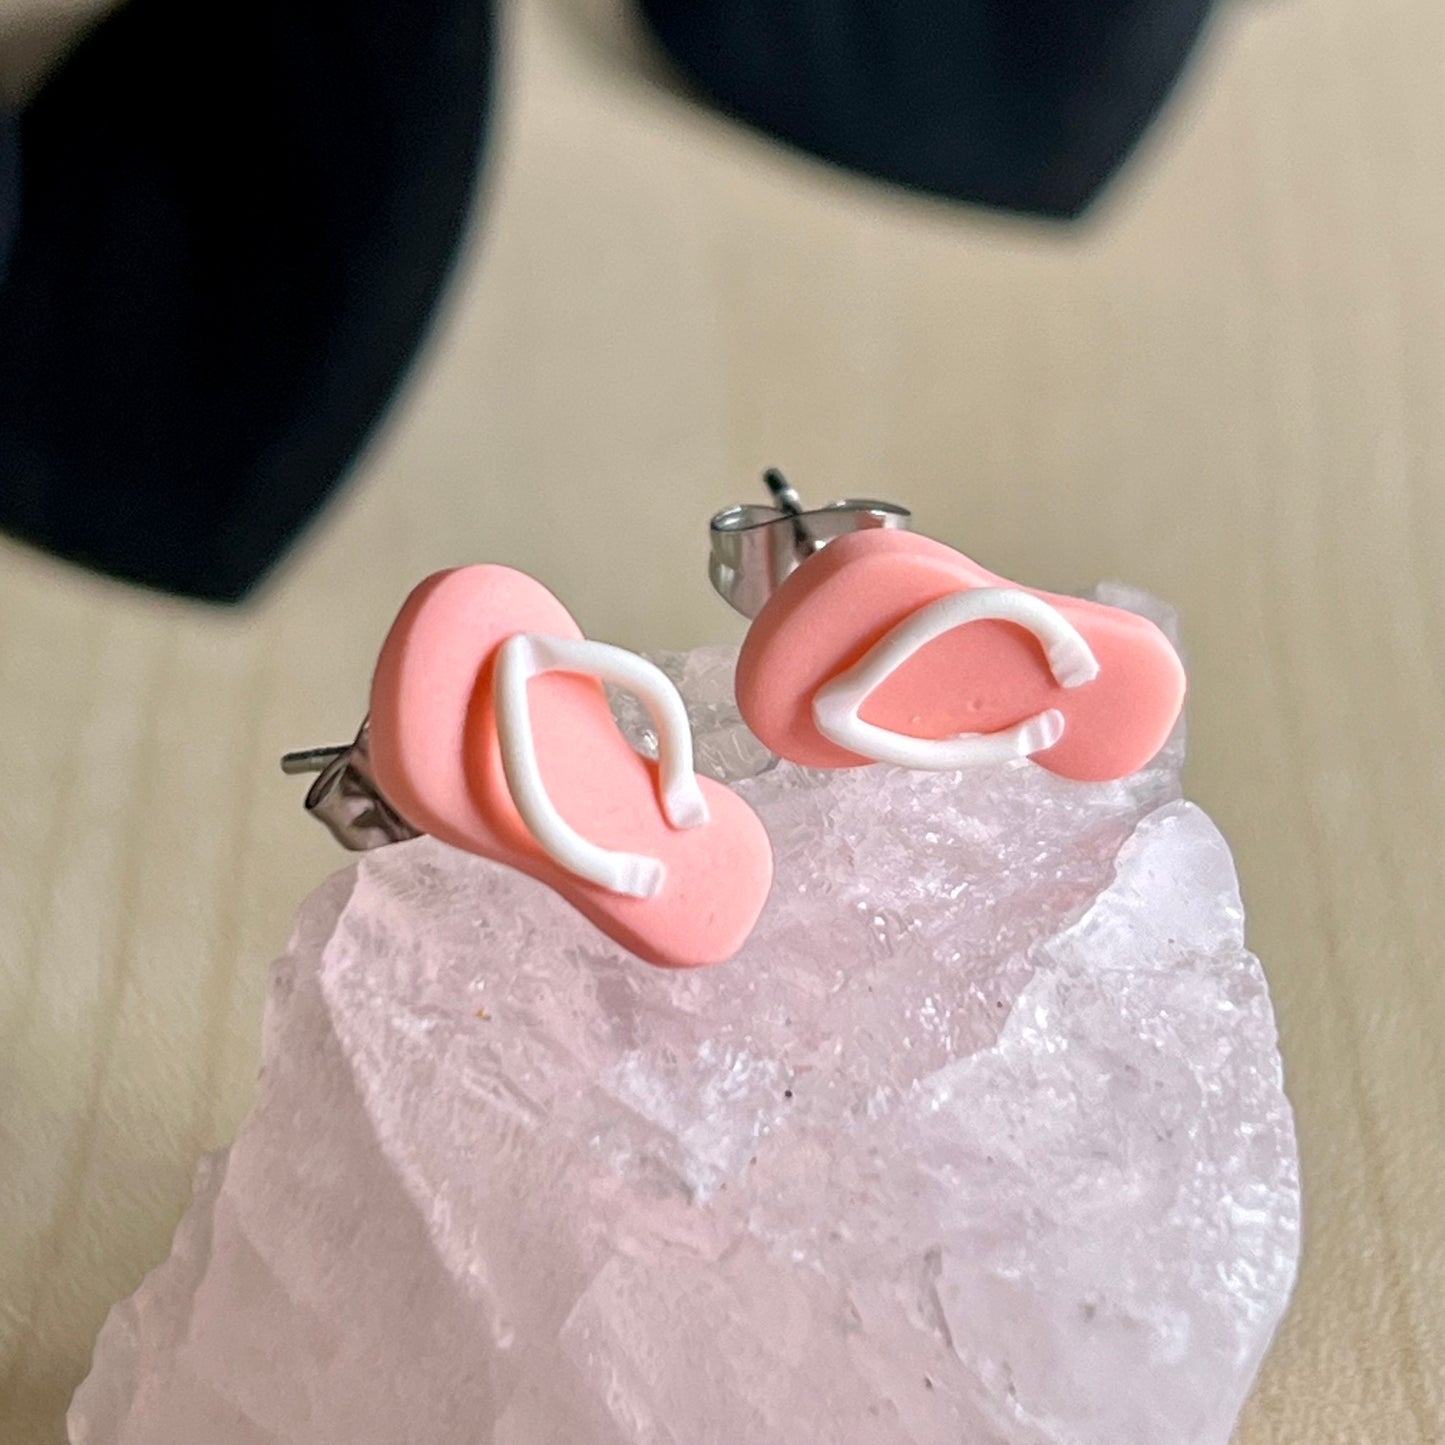 Thongs / flip flops studs, peach with white, handmade earrings